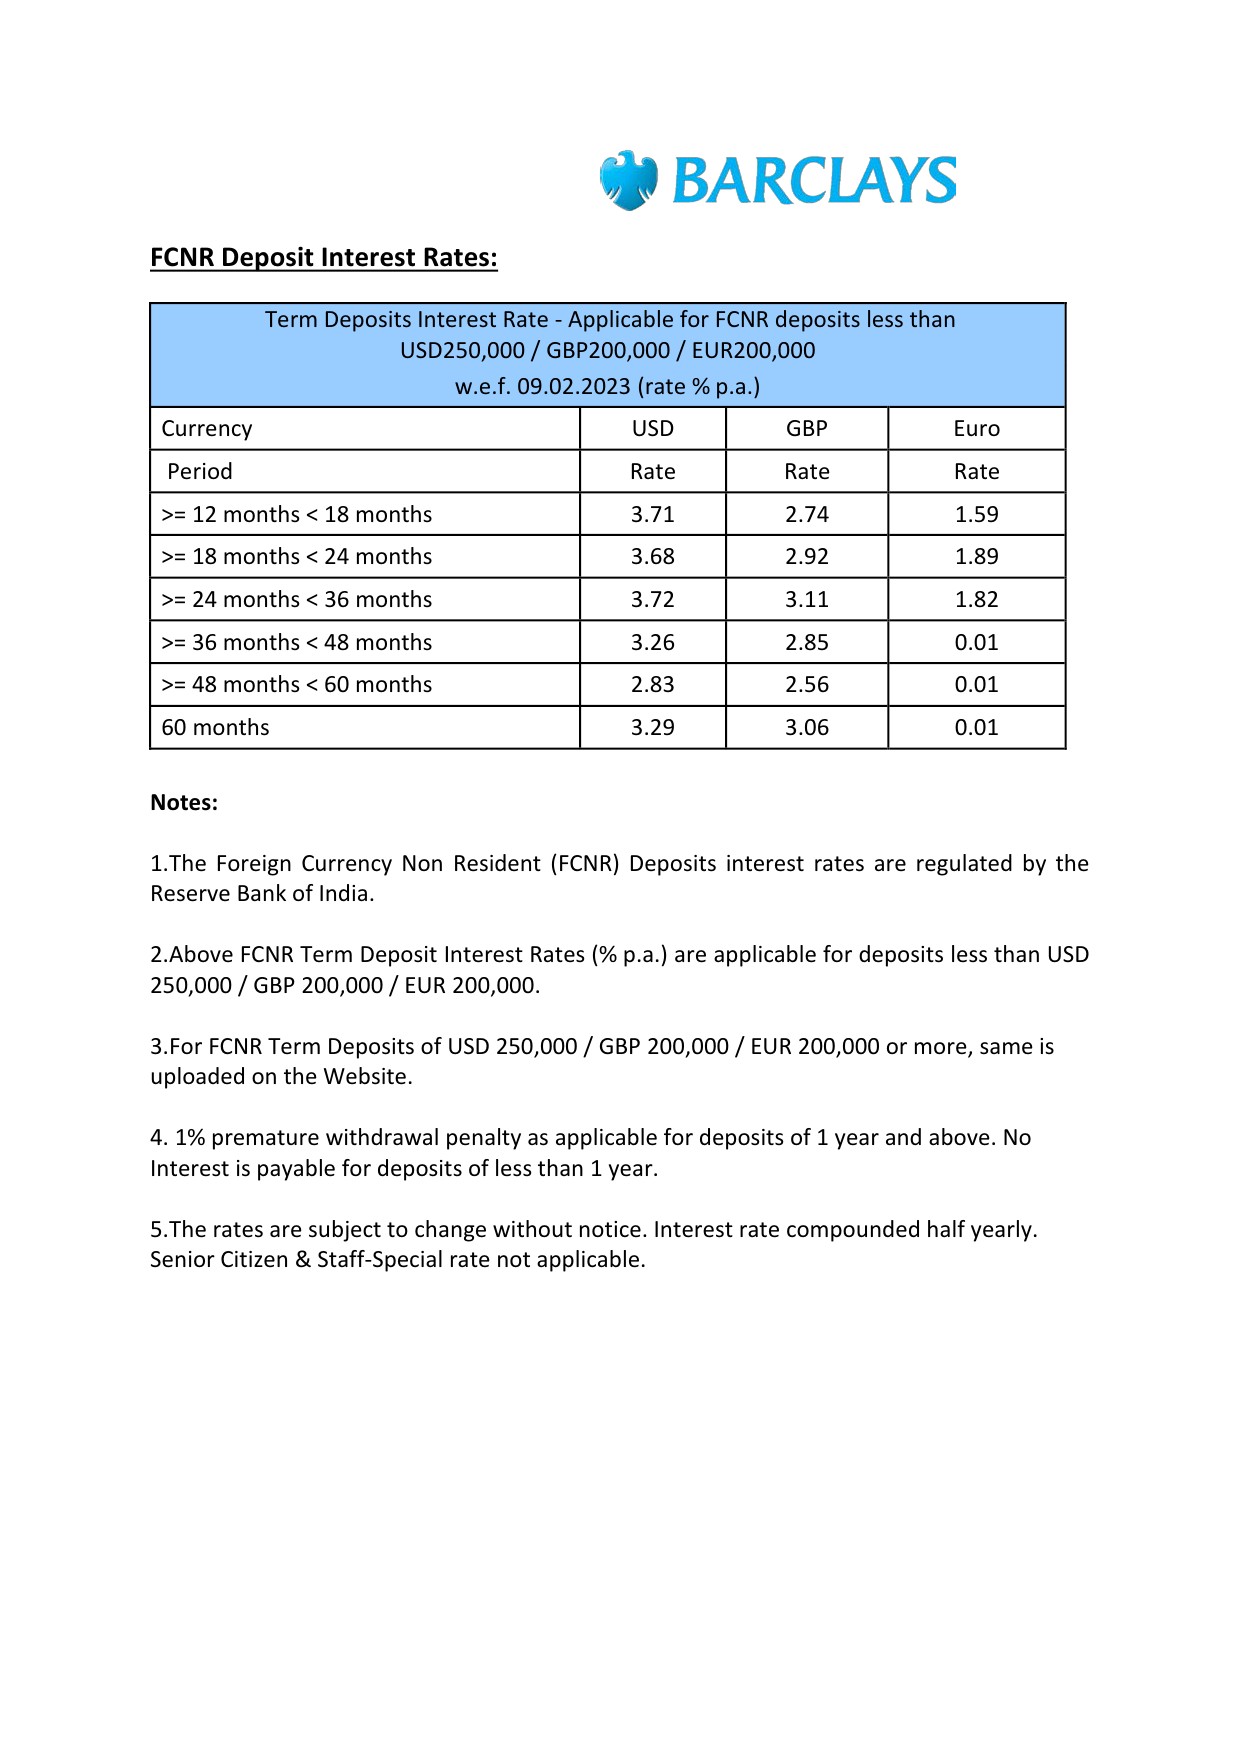 Fixed Deposit Interest Rates of Barclays Bank PLC - Image 3